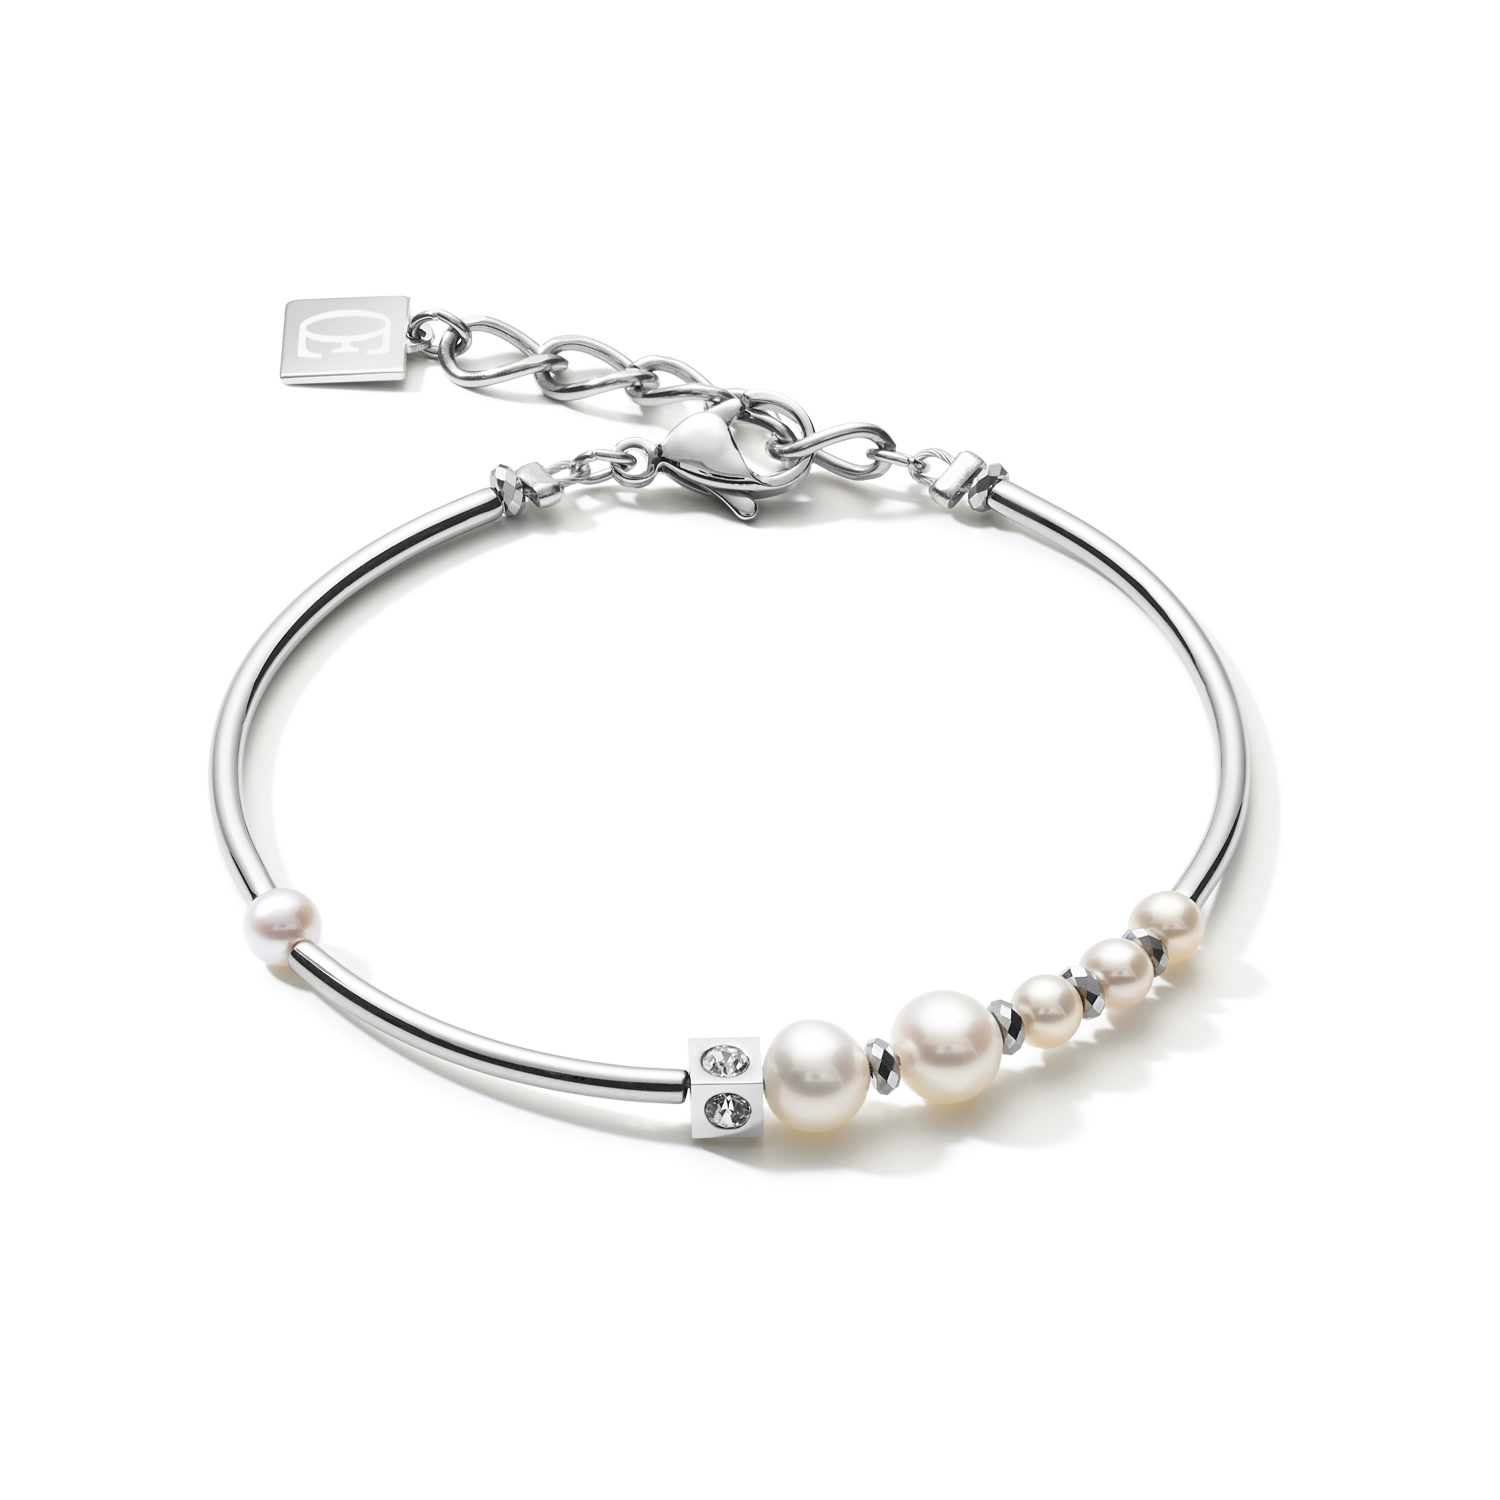 Bracciale Asimmetria perle d'acqua dolce e acciaio inossidabile bianco-argento